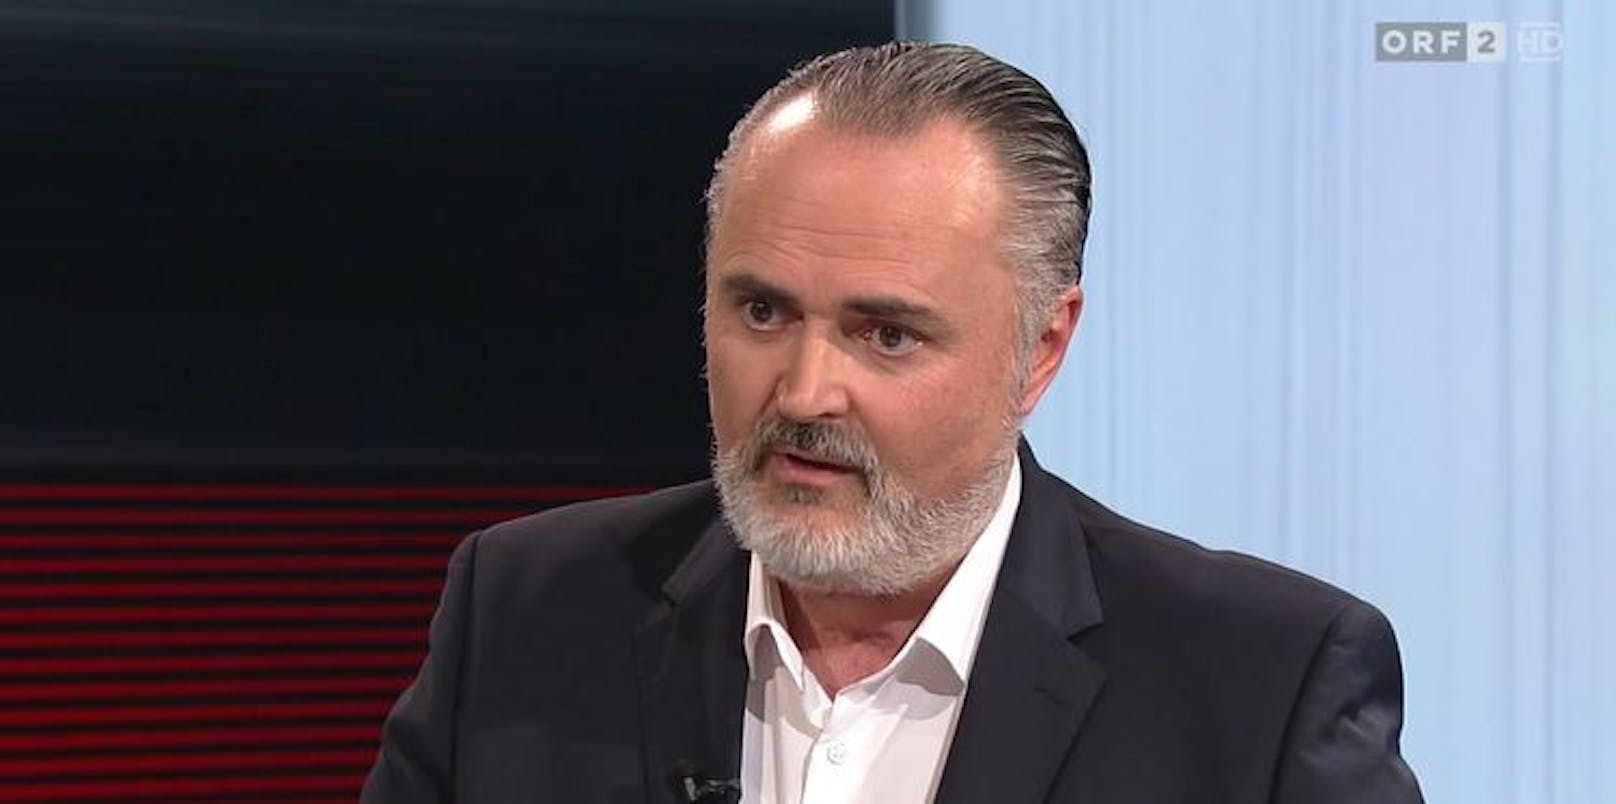 Zeigte sich angriffig im ORF-"Report": Burgenlands Landeshauptmann Hans Peter Doskozil (SPÖ).